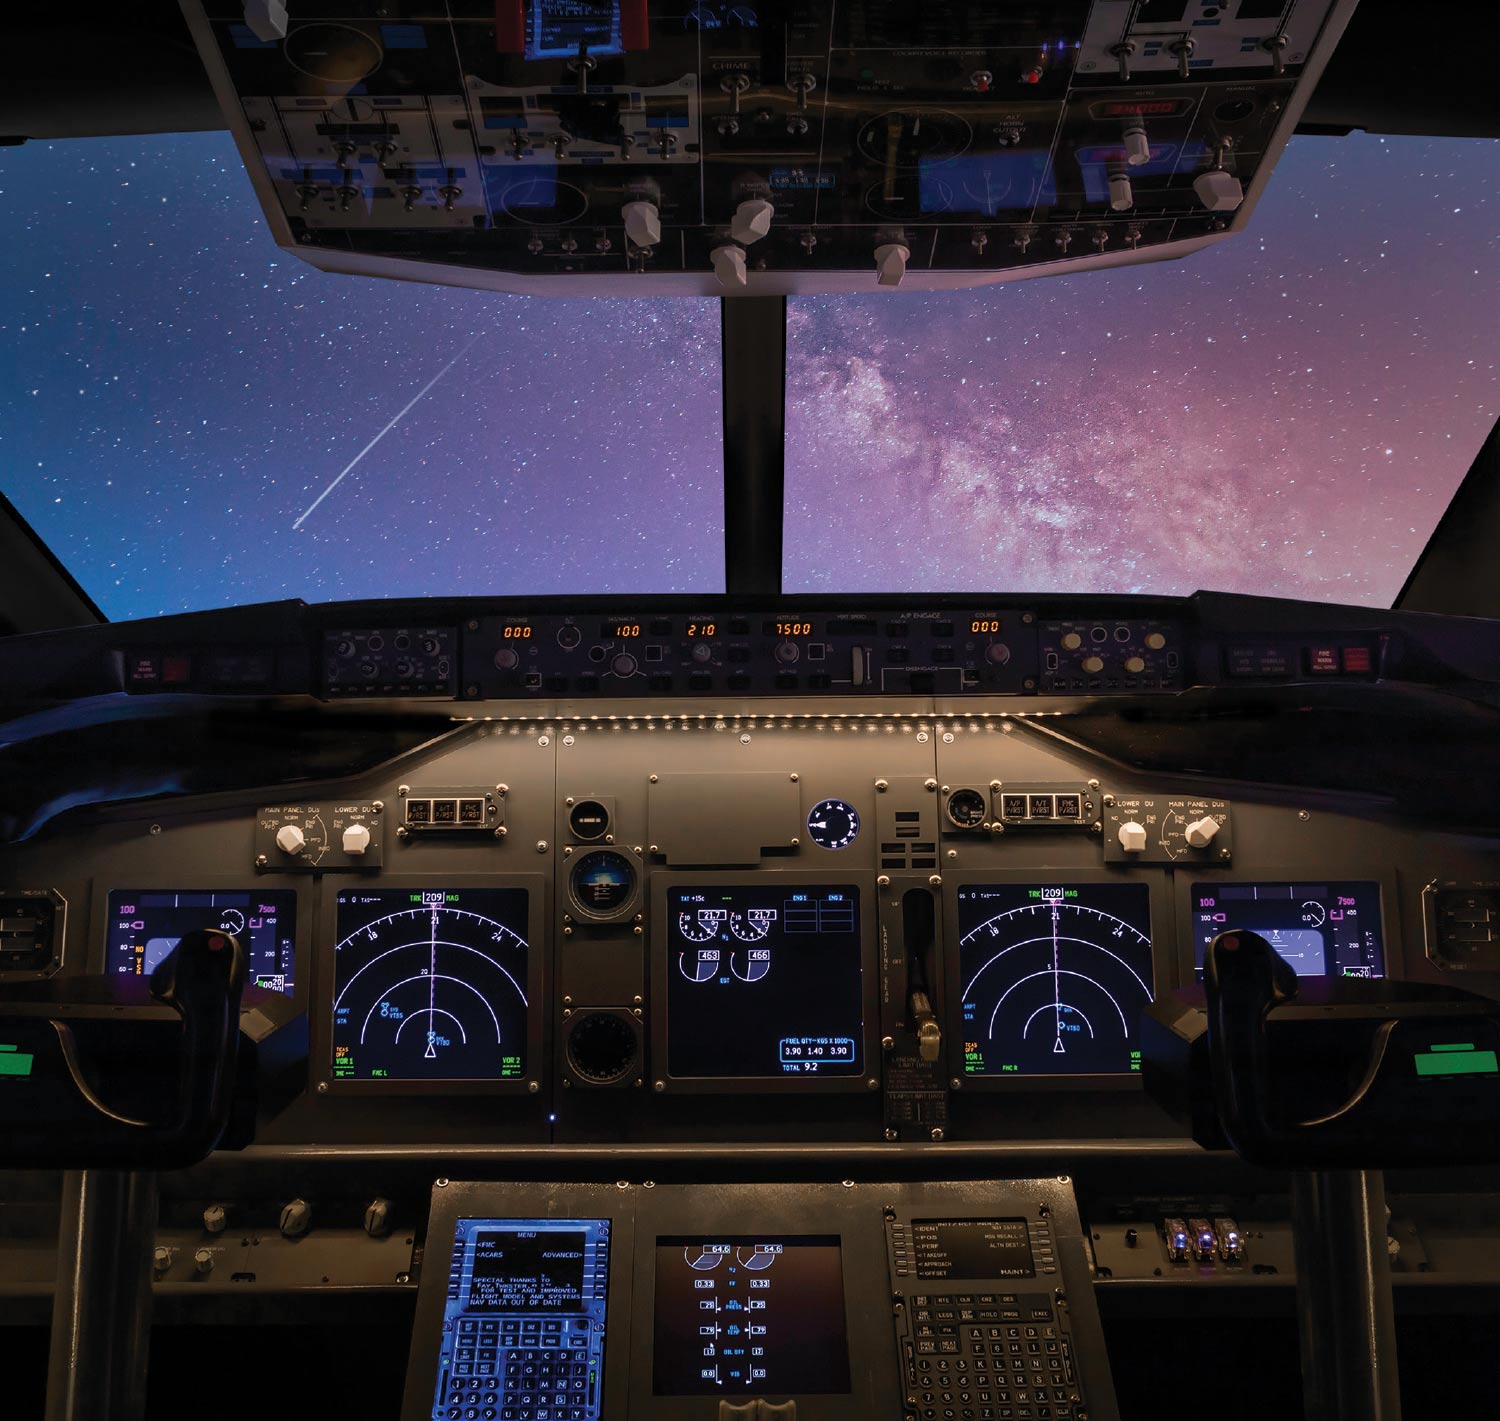 Airplane's cockpit